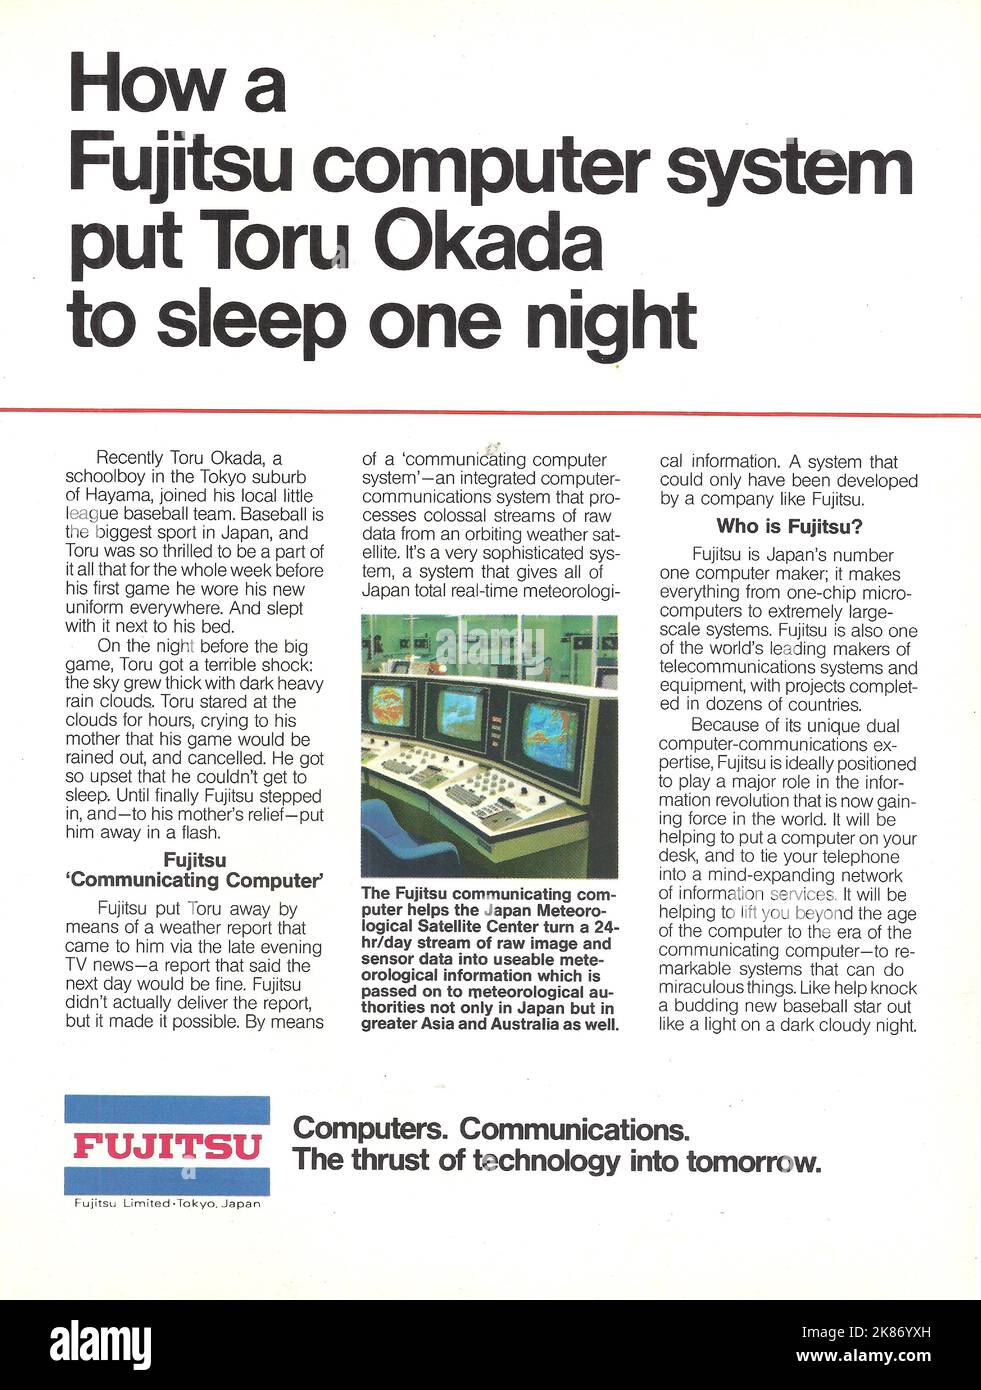 Fujitsu computers Fujitsu computer magazine advert vintage paper advertisement Stock Photo